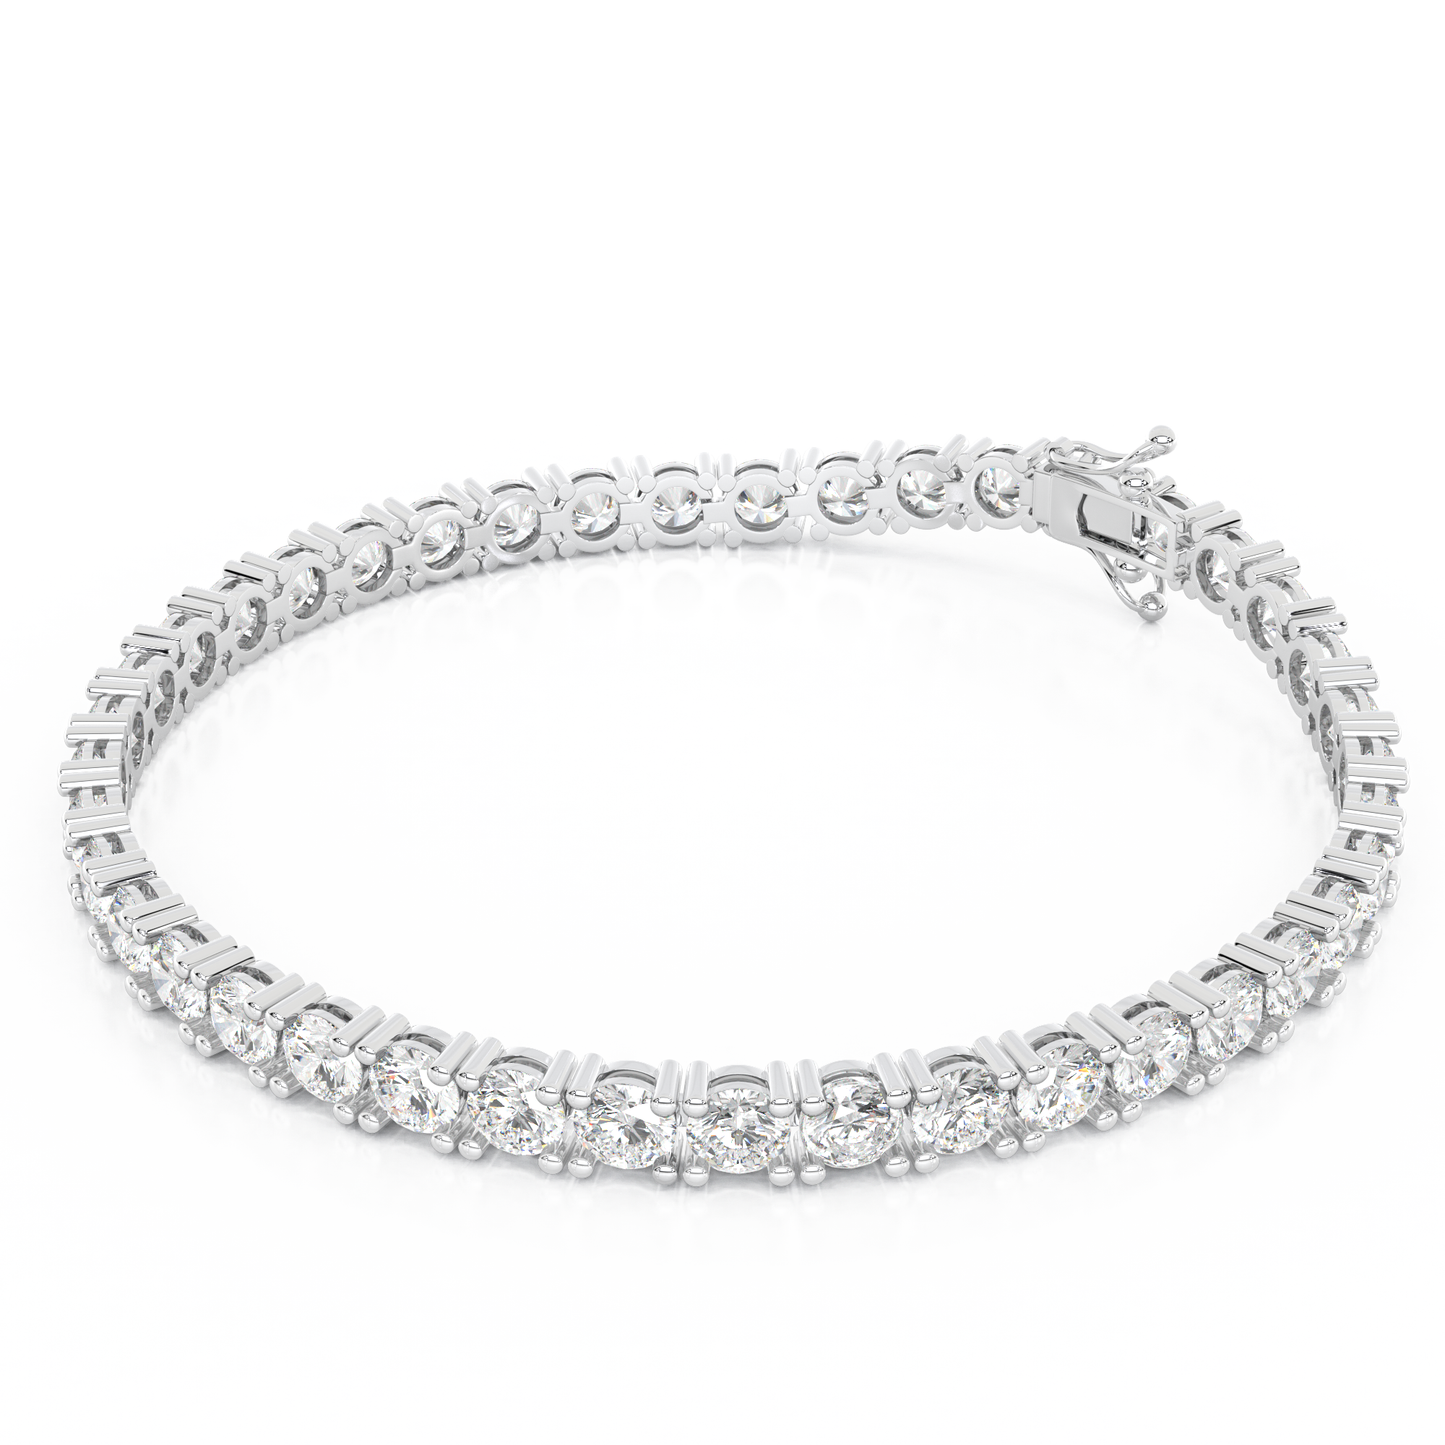 8.00cts+ 4-Prong Lab Grown Diamond Bracelet <Affordable>